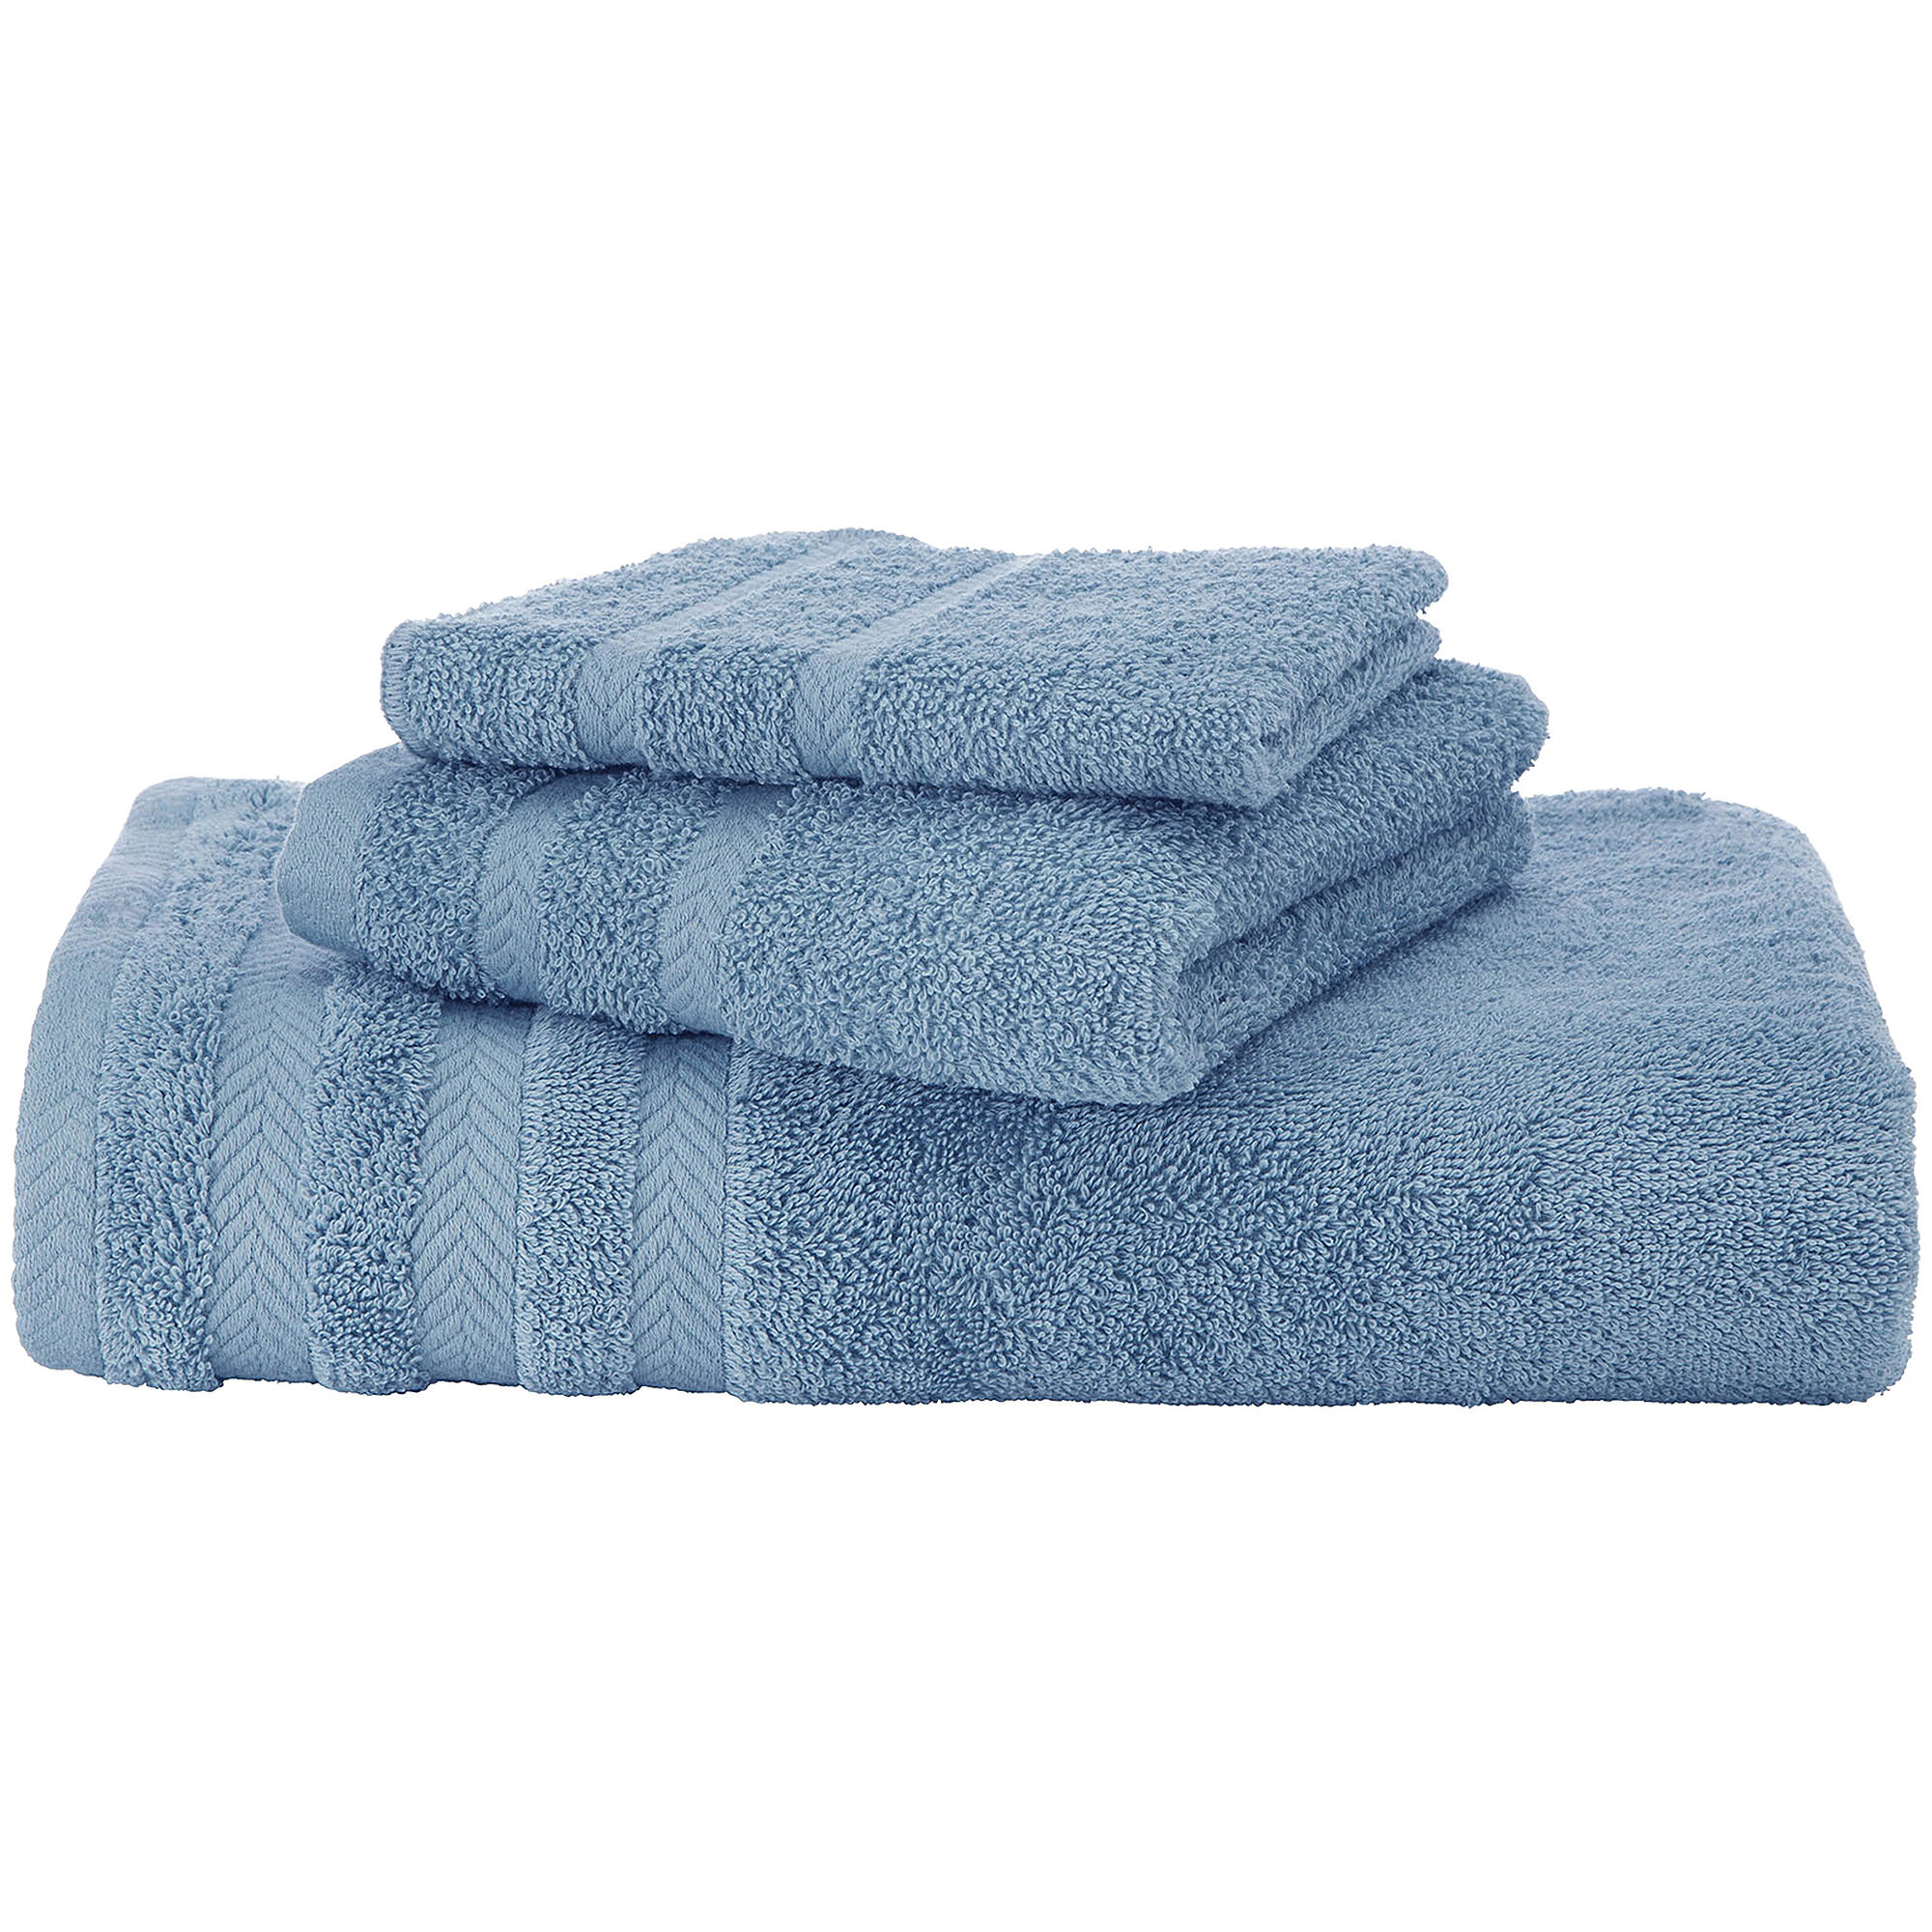 UPC 079465806861 product image for Martex Egyptian Cotton Bath Towels | upcitemdb.com